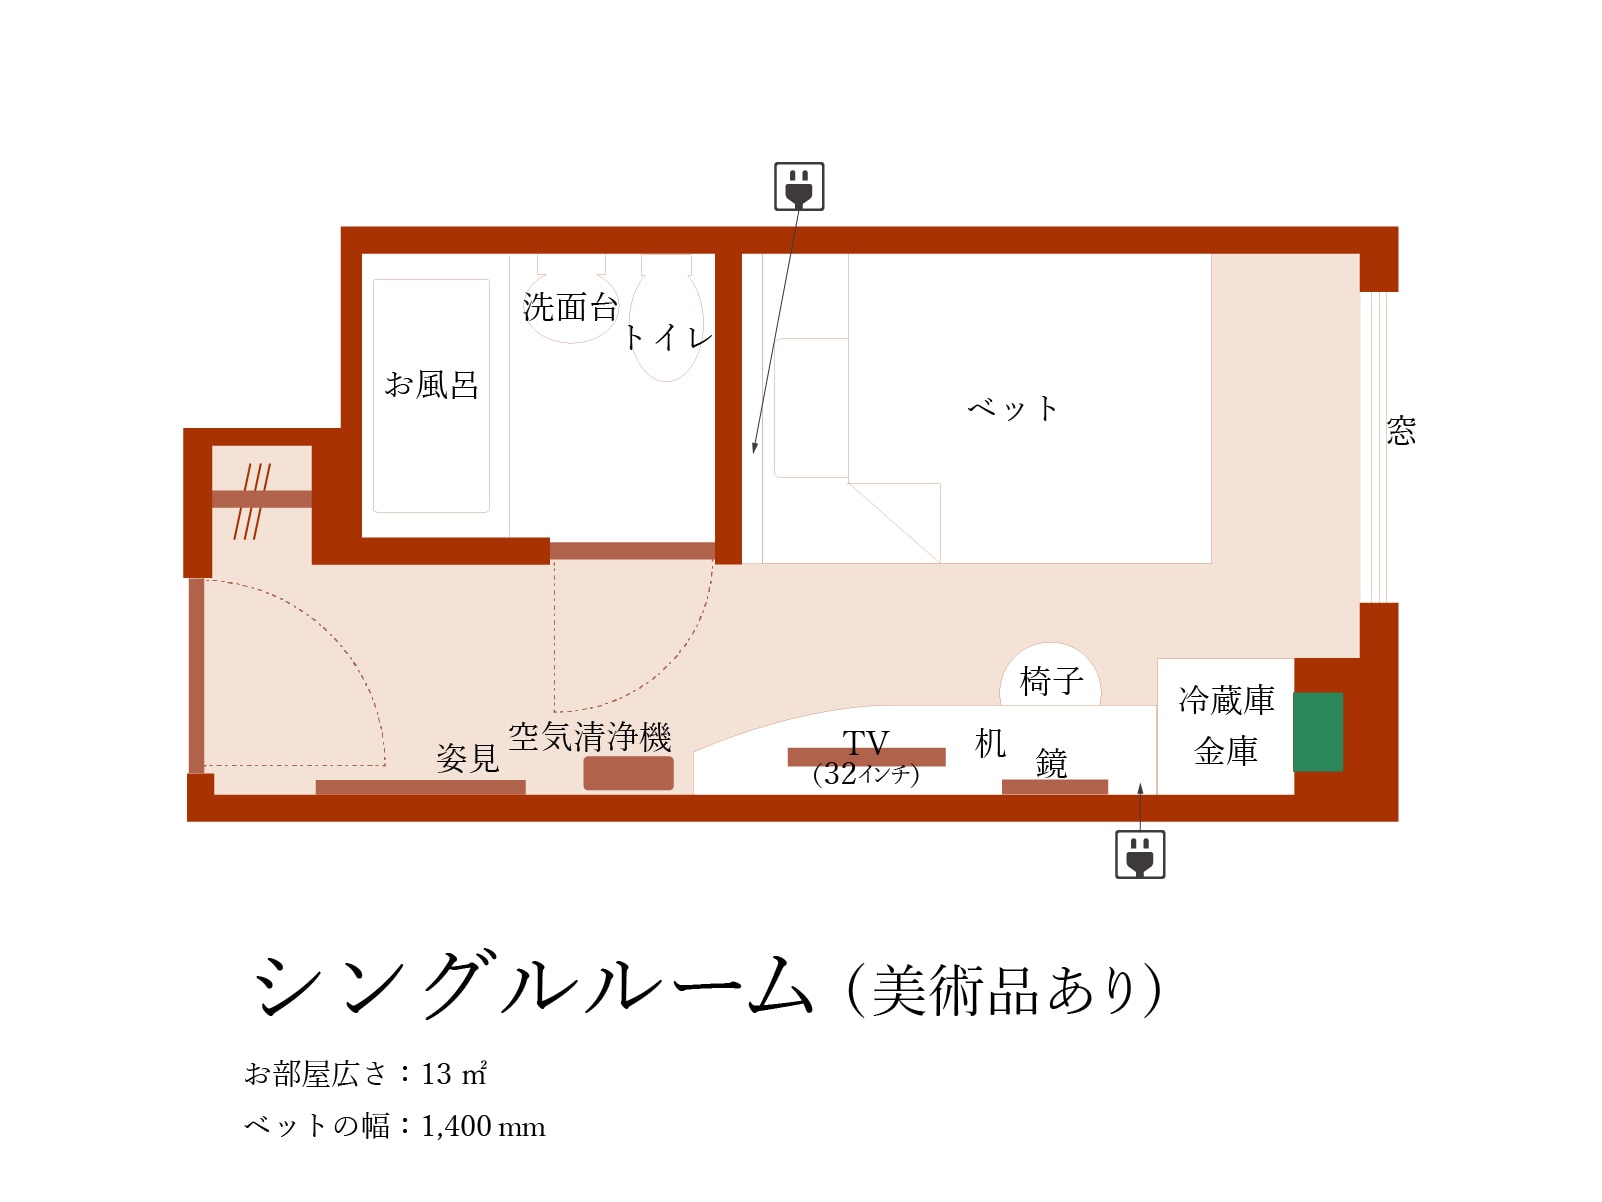 Single room floor plan (with works of art) Room details